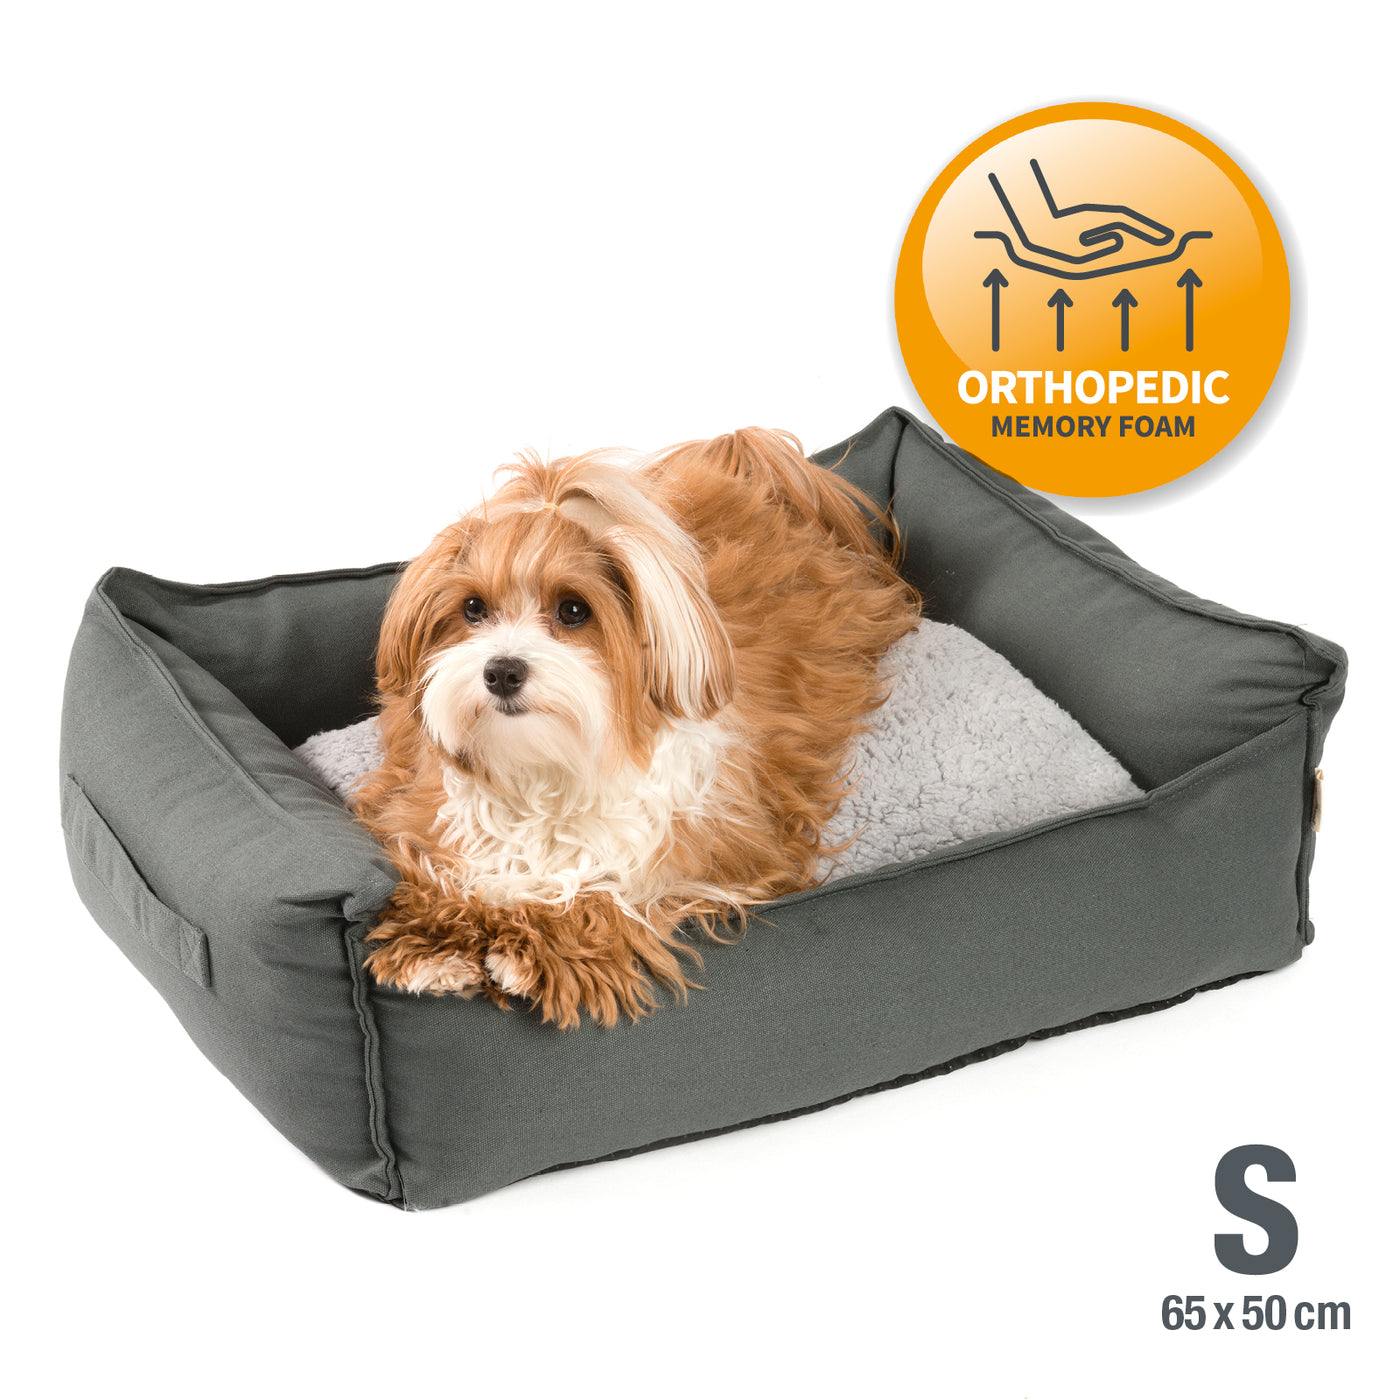 Premium Hundebett / Hunde-Sofa, orthopädische Füllung, waschbar, Größe S, grau